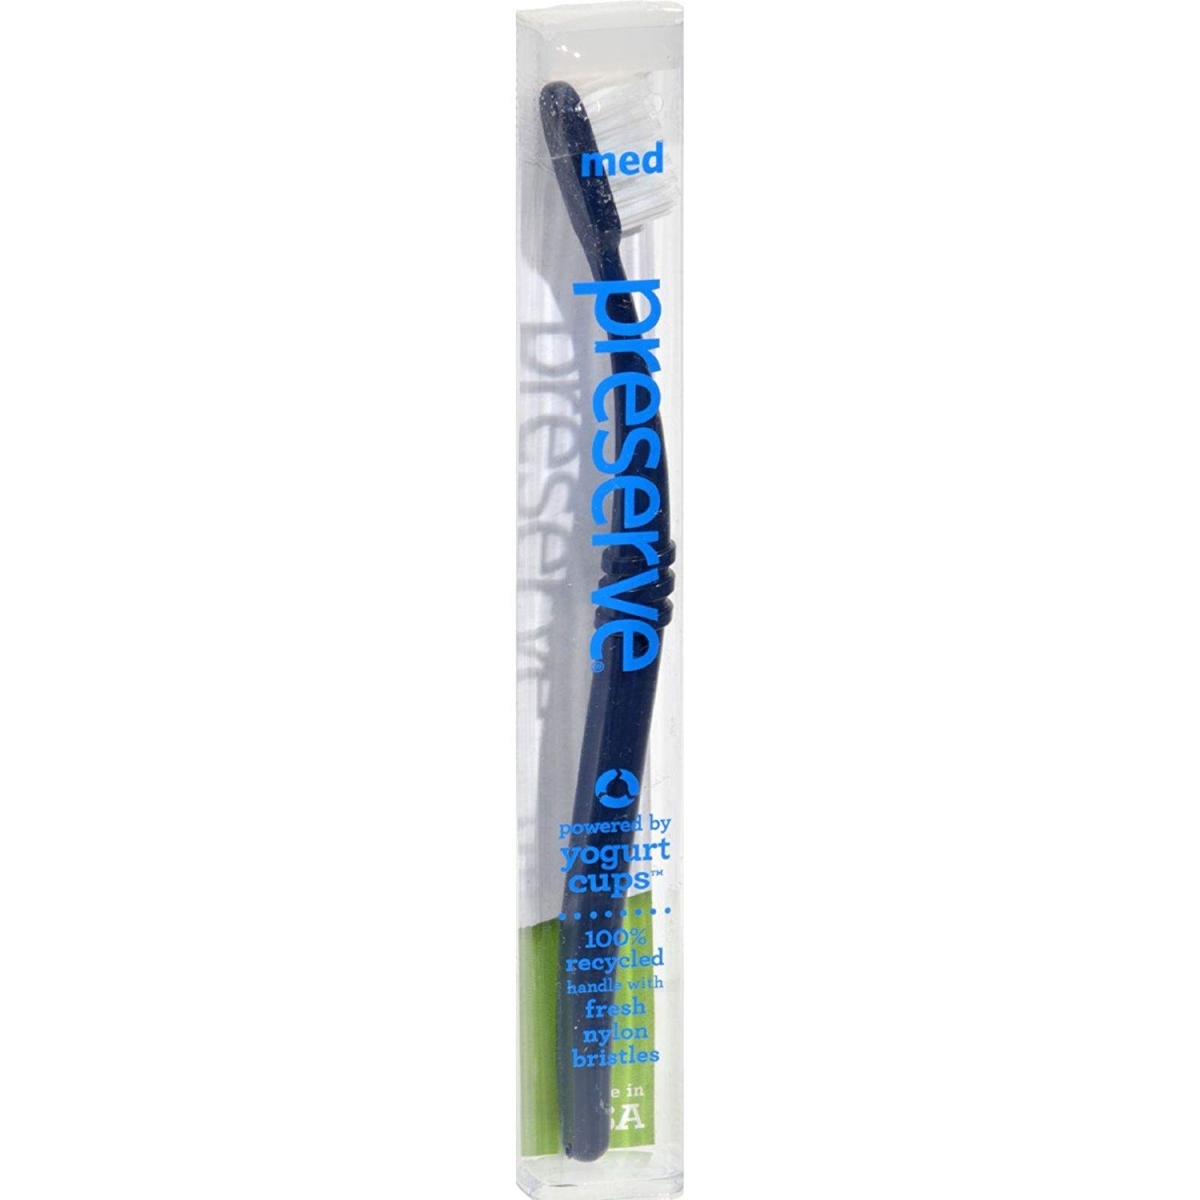 Khfm00767079 Medium Bristle Toothbrush